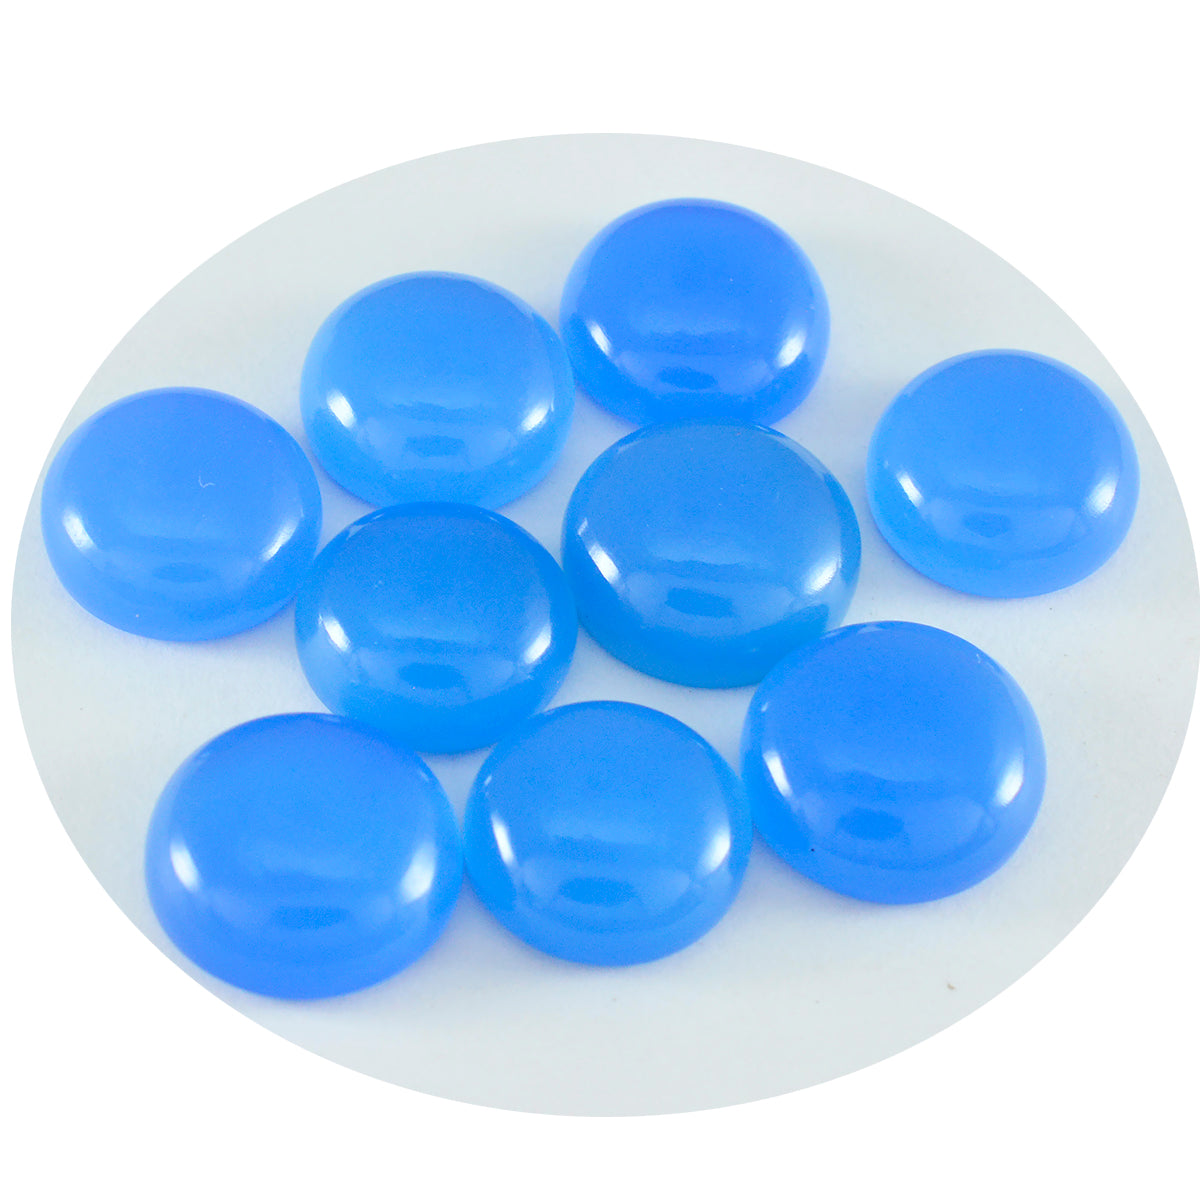 Riyogems 1PC Blue Chalcedony Cabochon 6x6 mm Round Shape Good Quality Gems